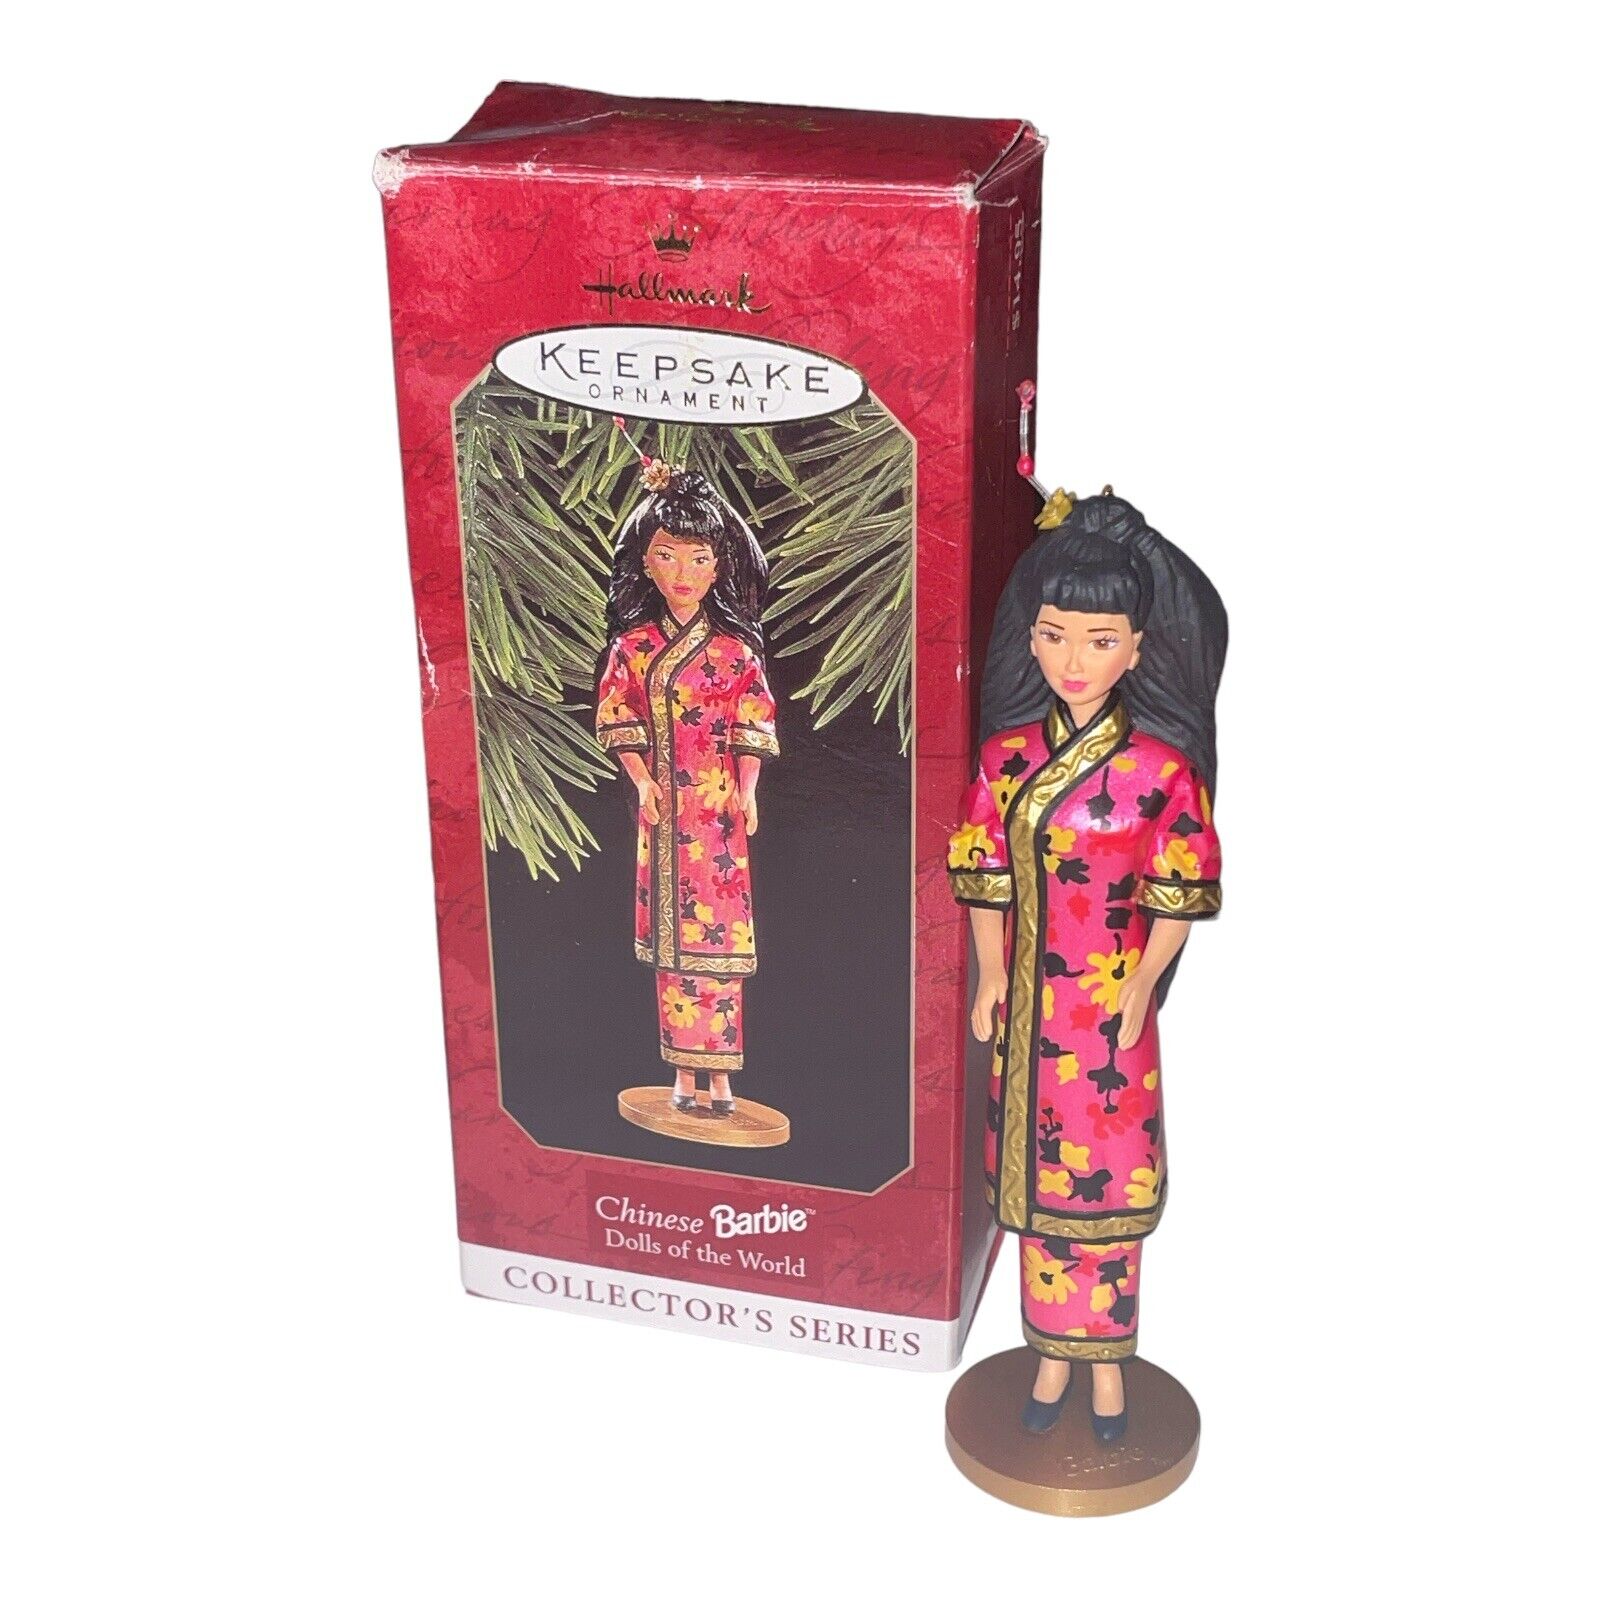 1997 Hallmark Keepsake Chinese Barbie Ornament Dolls Of The World 2nd in Series